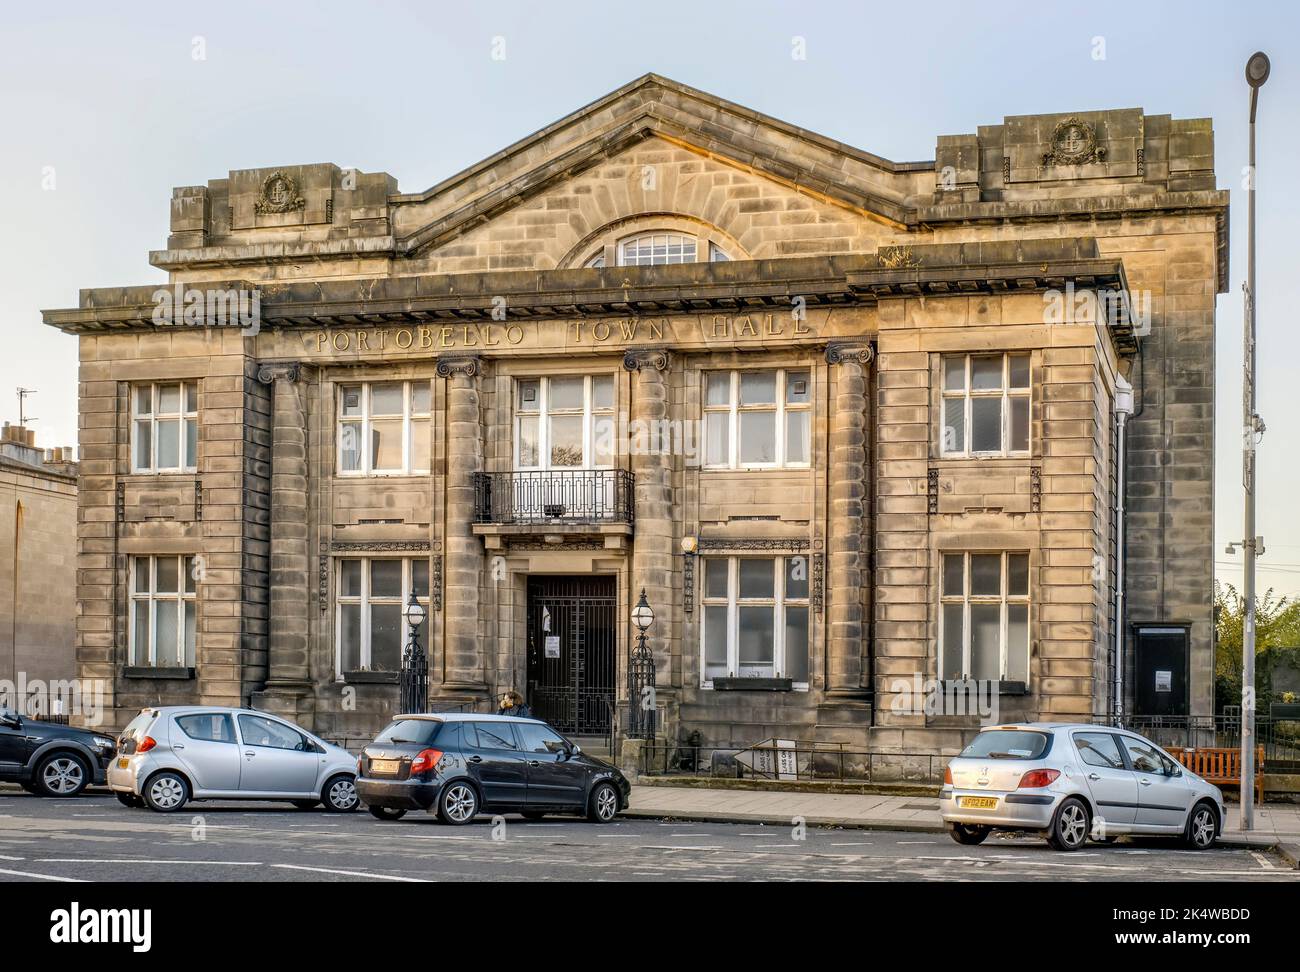 Portobello Town Hall, Edinburgh, Scotland, UK Stock Photo